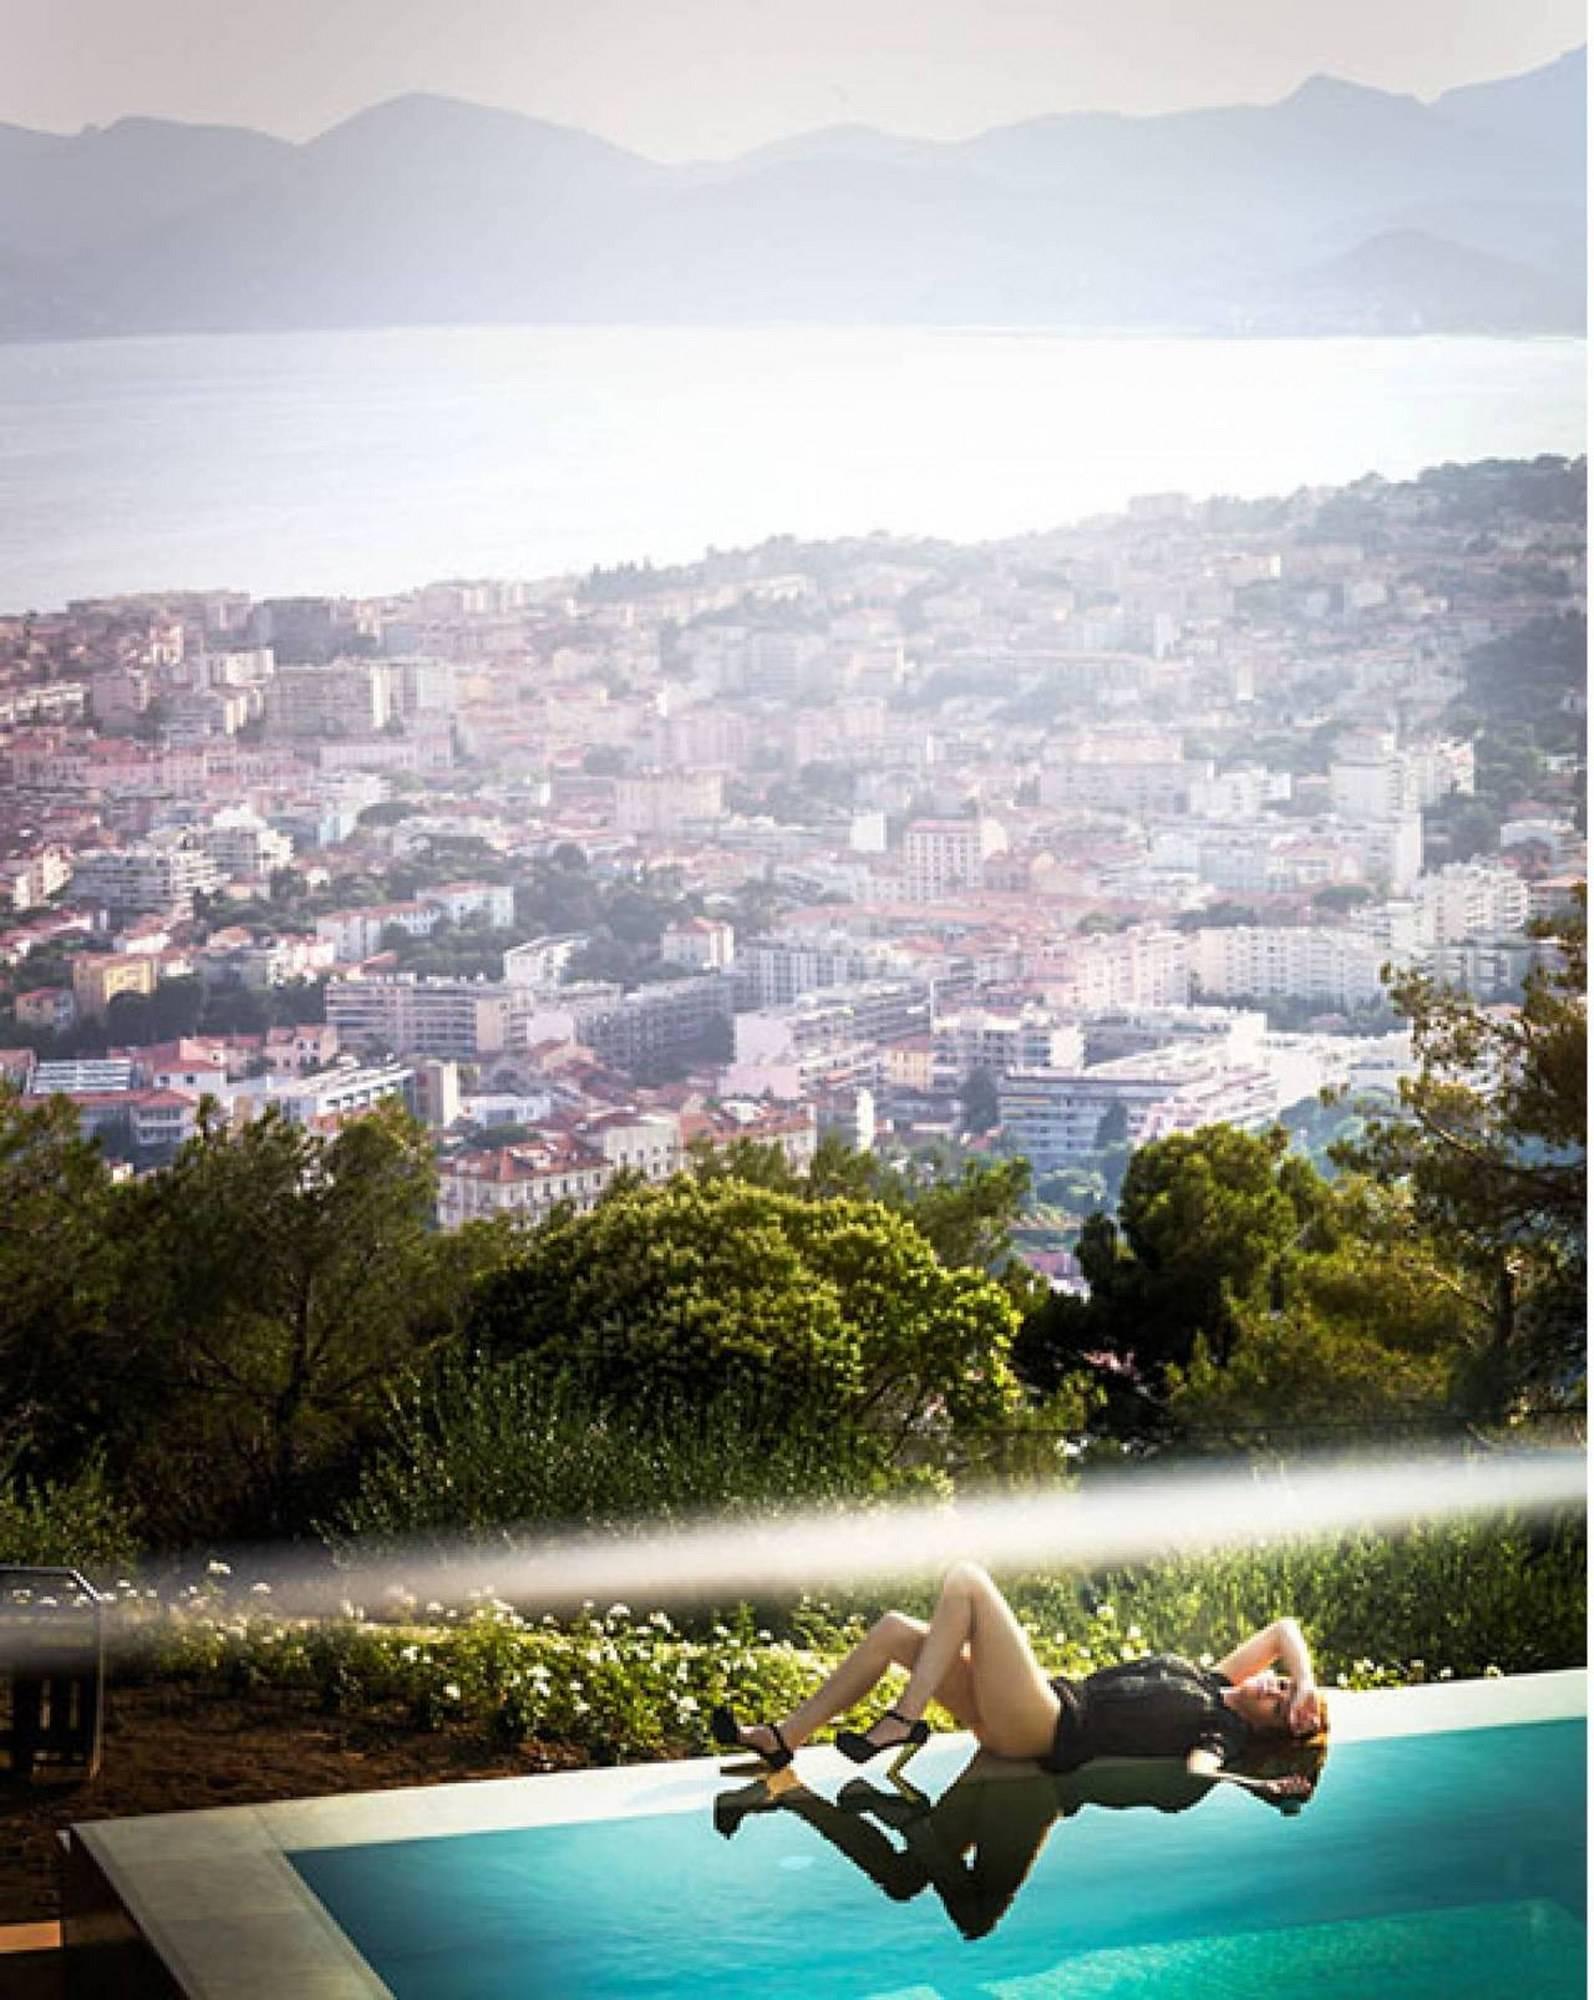 David Drebin Color Photograph – Dreams of Cannes (Frankreich)